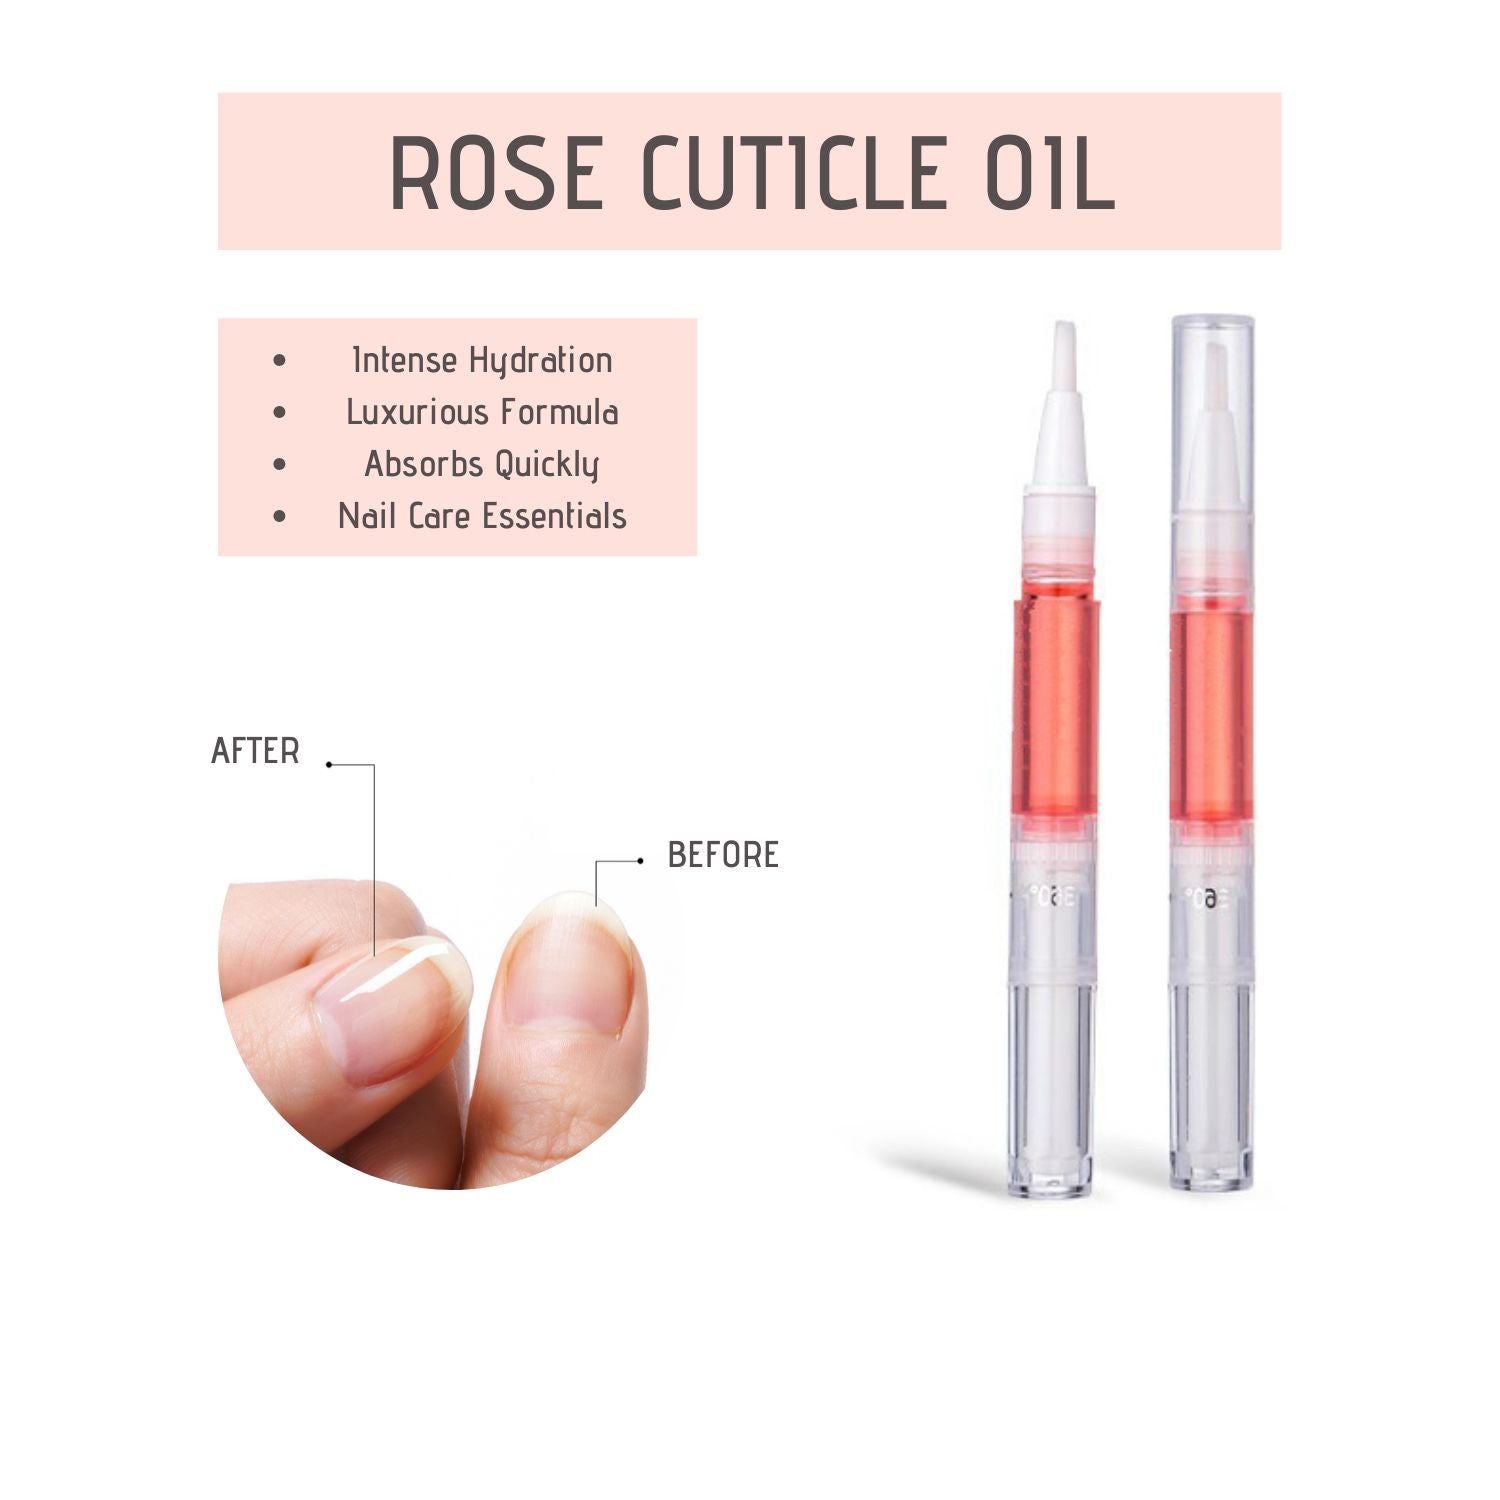 Rose Cuticle Oil